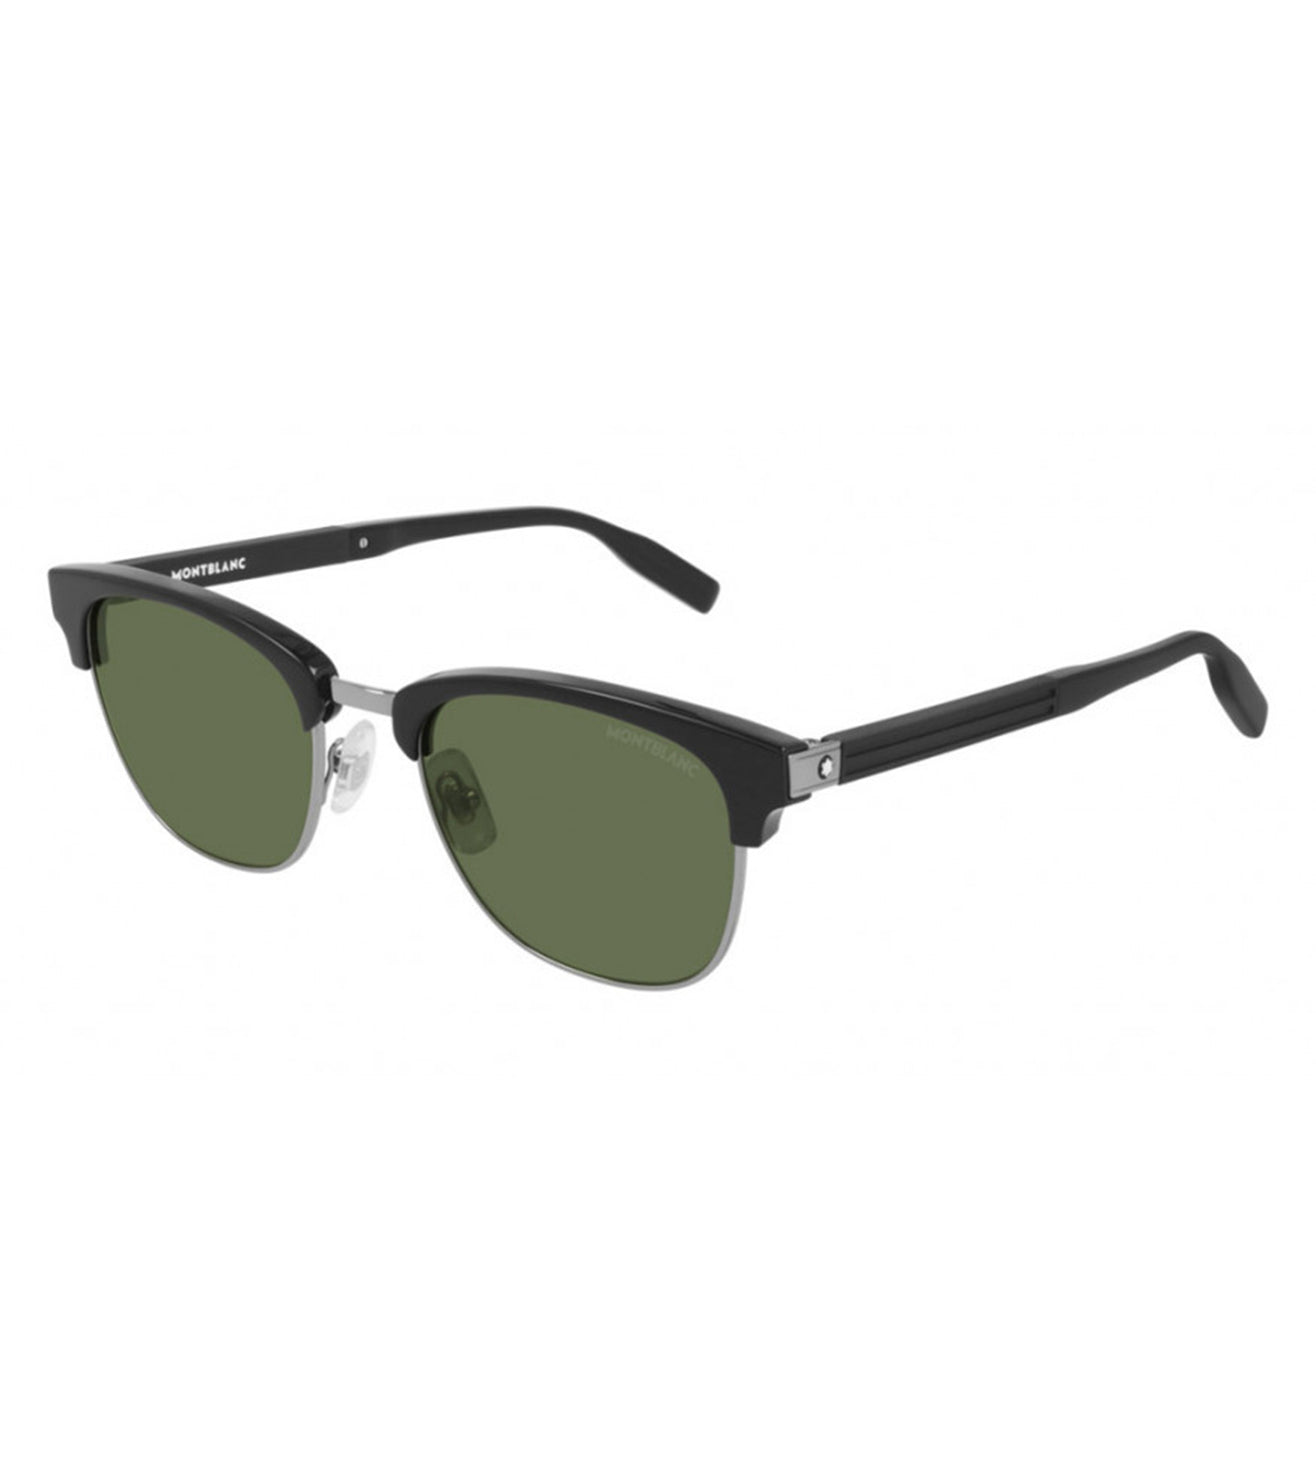 Montblanc Men's Green Rectangular Sunglasses